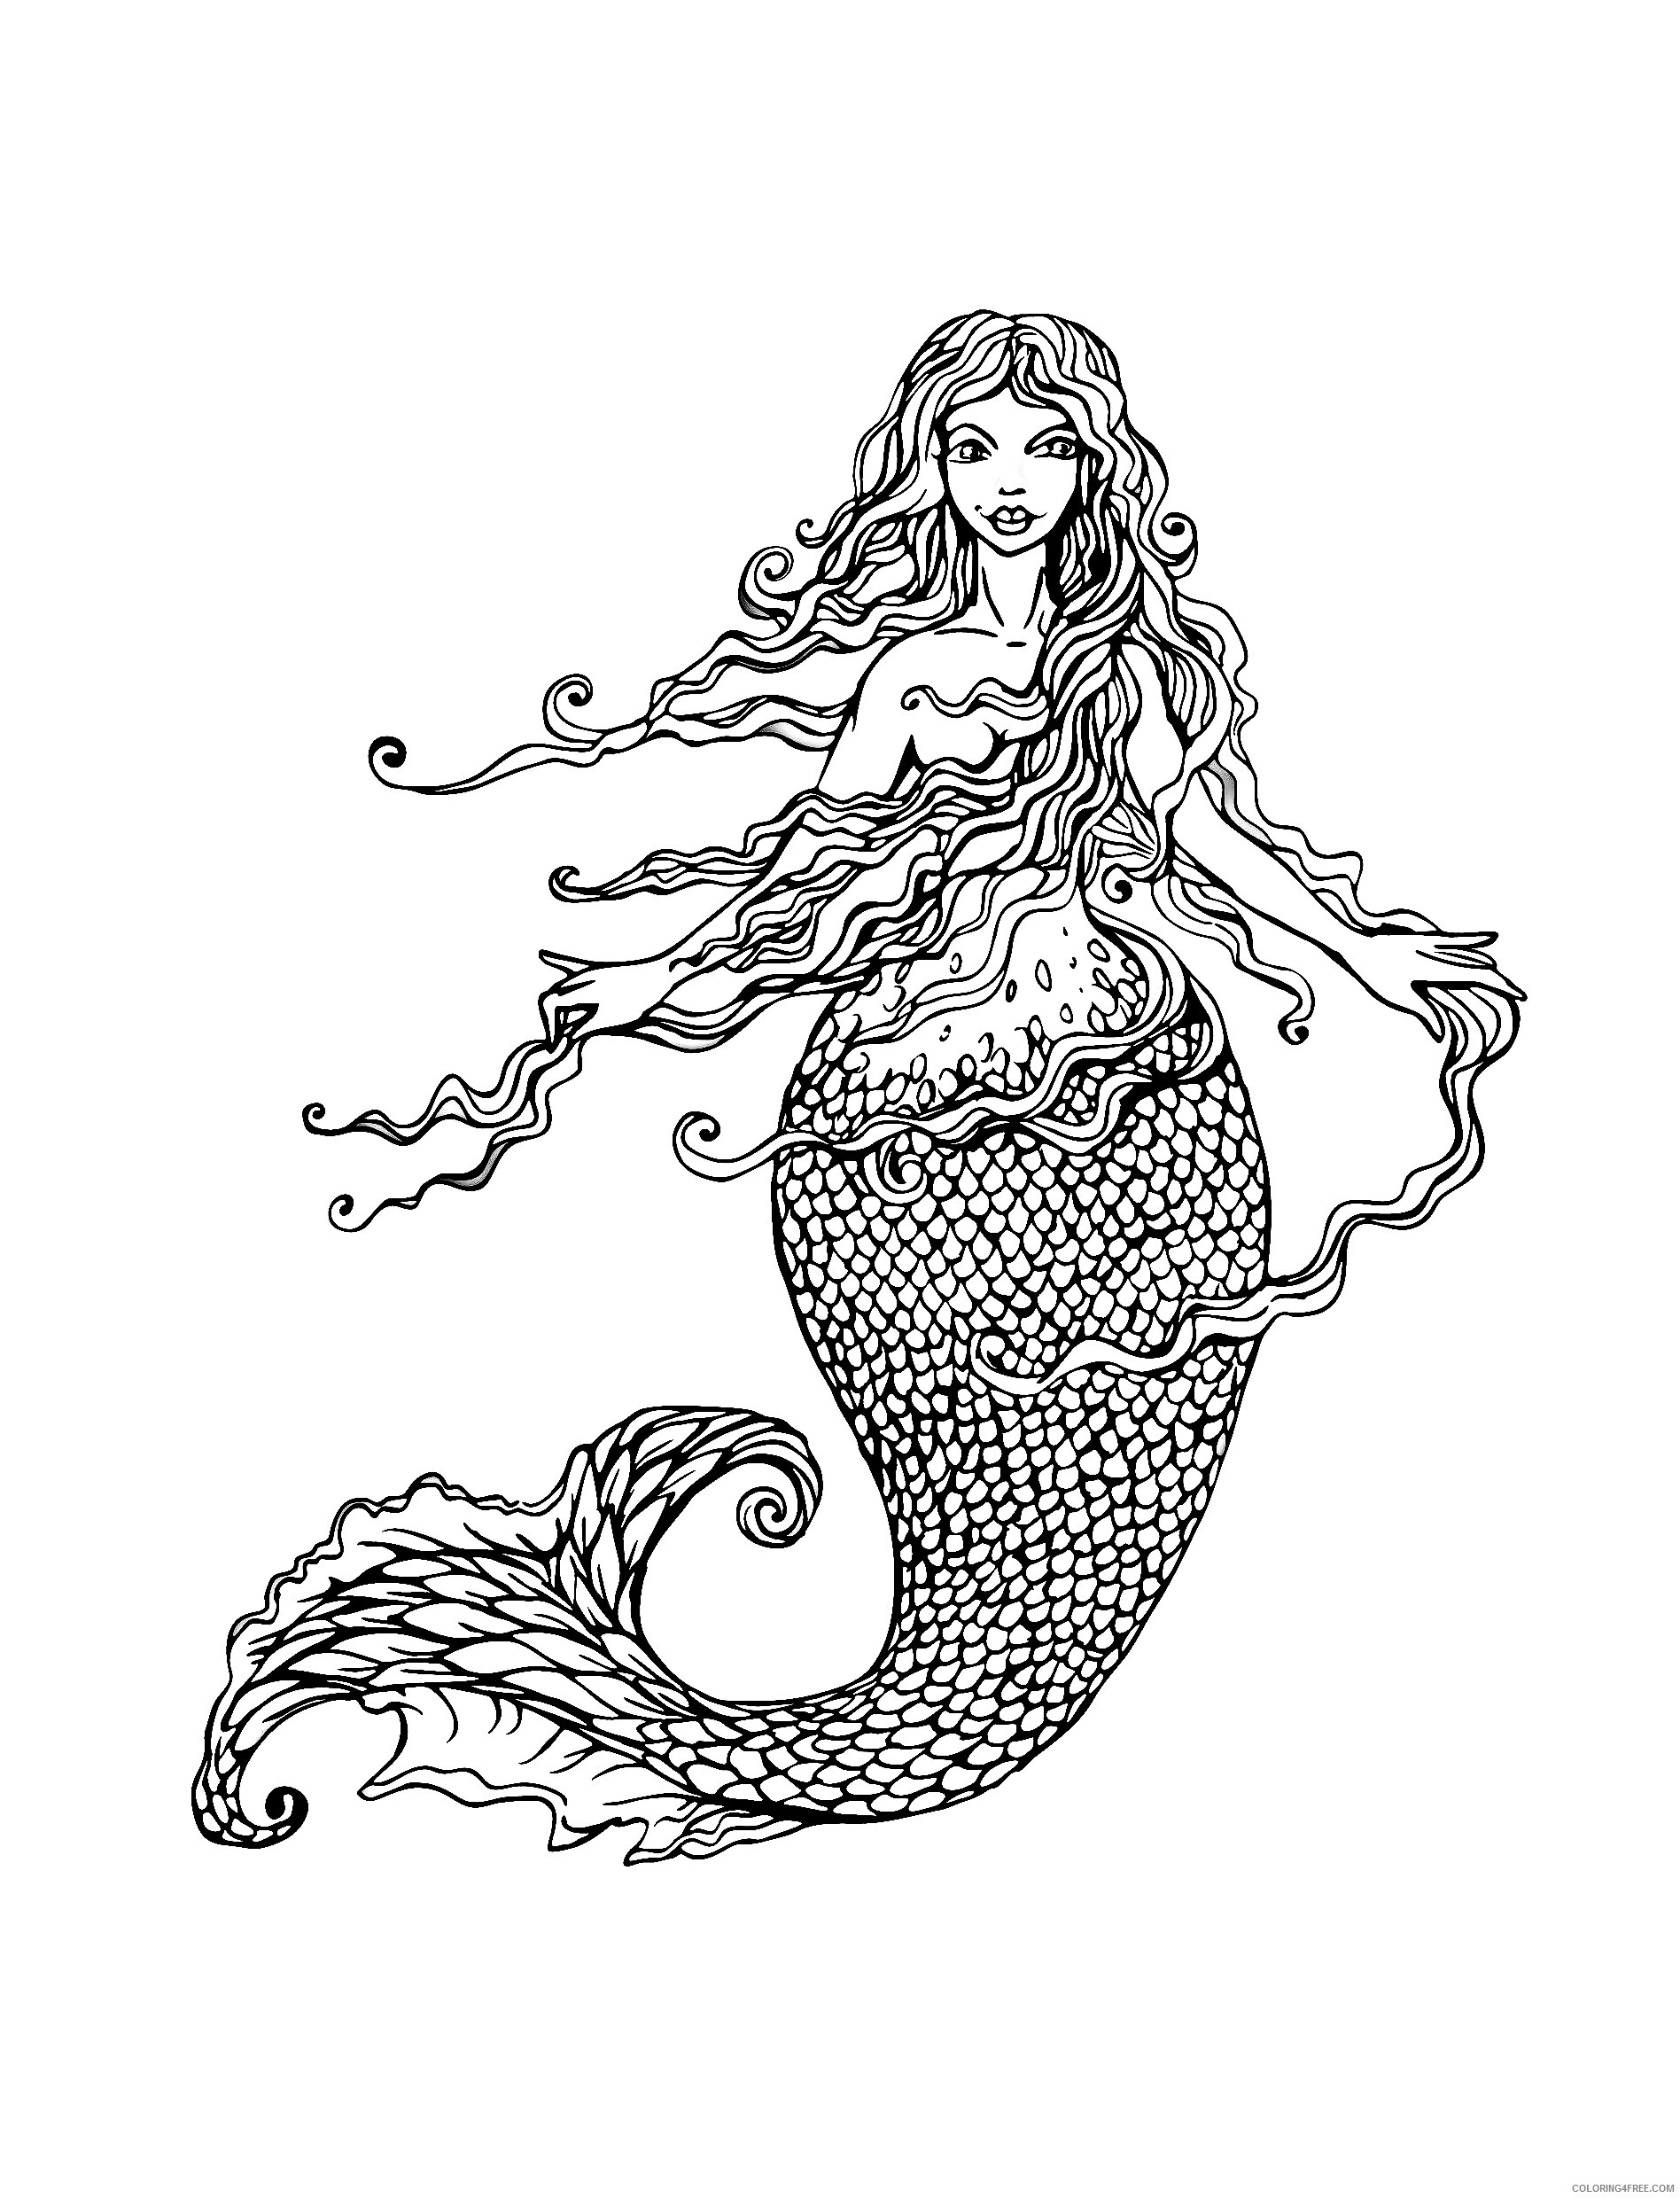 Mermaid Coloring Pages Mermaid for Adult Printable 2021 4119 Coloring4free